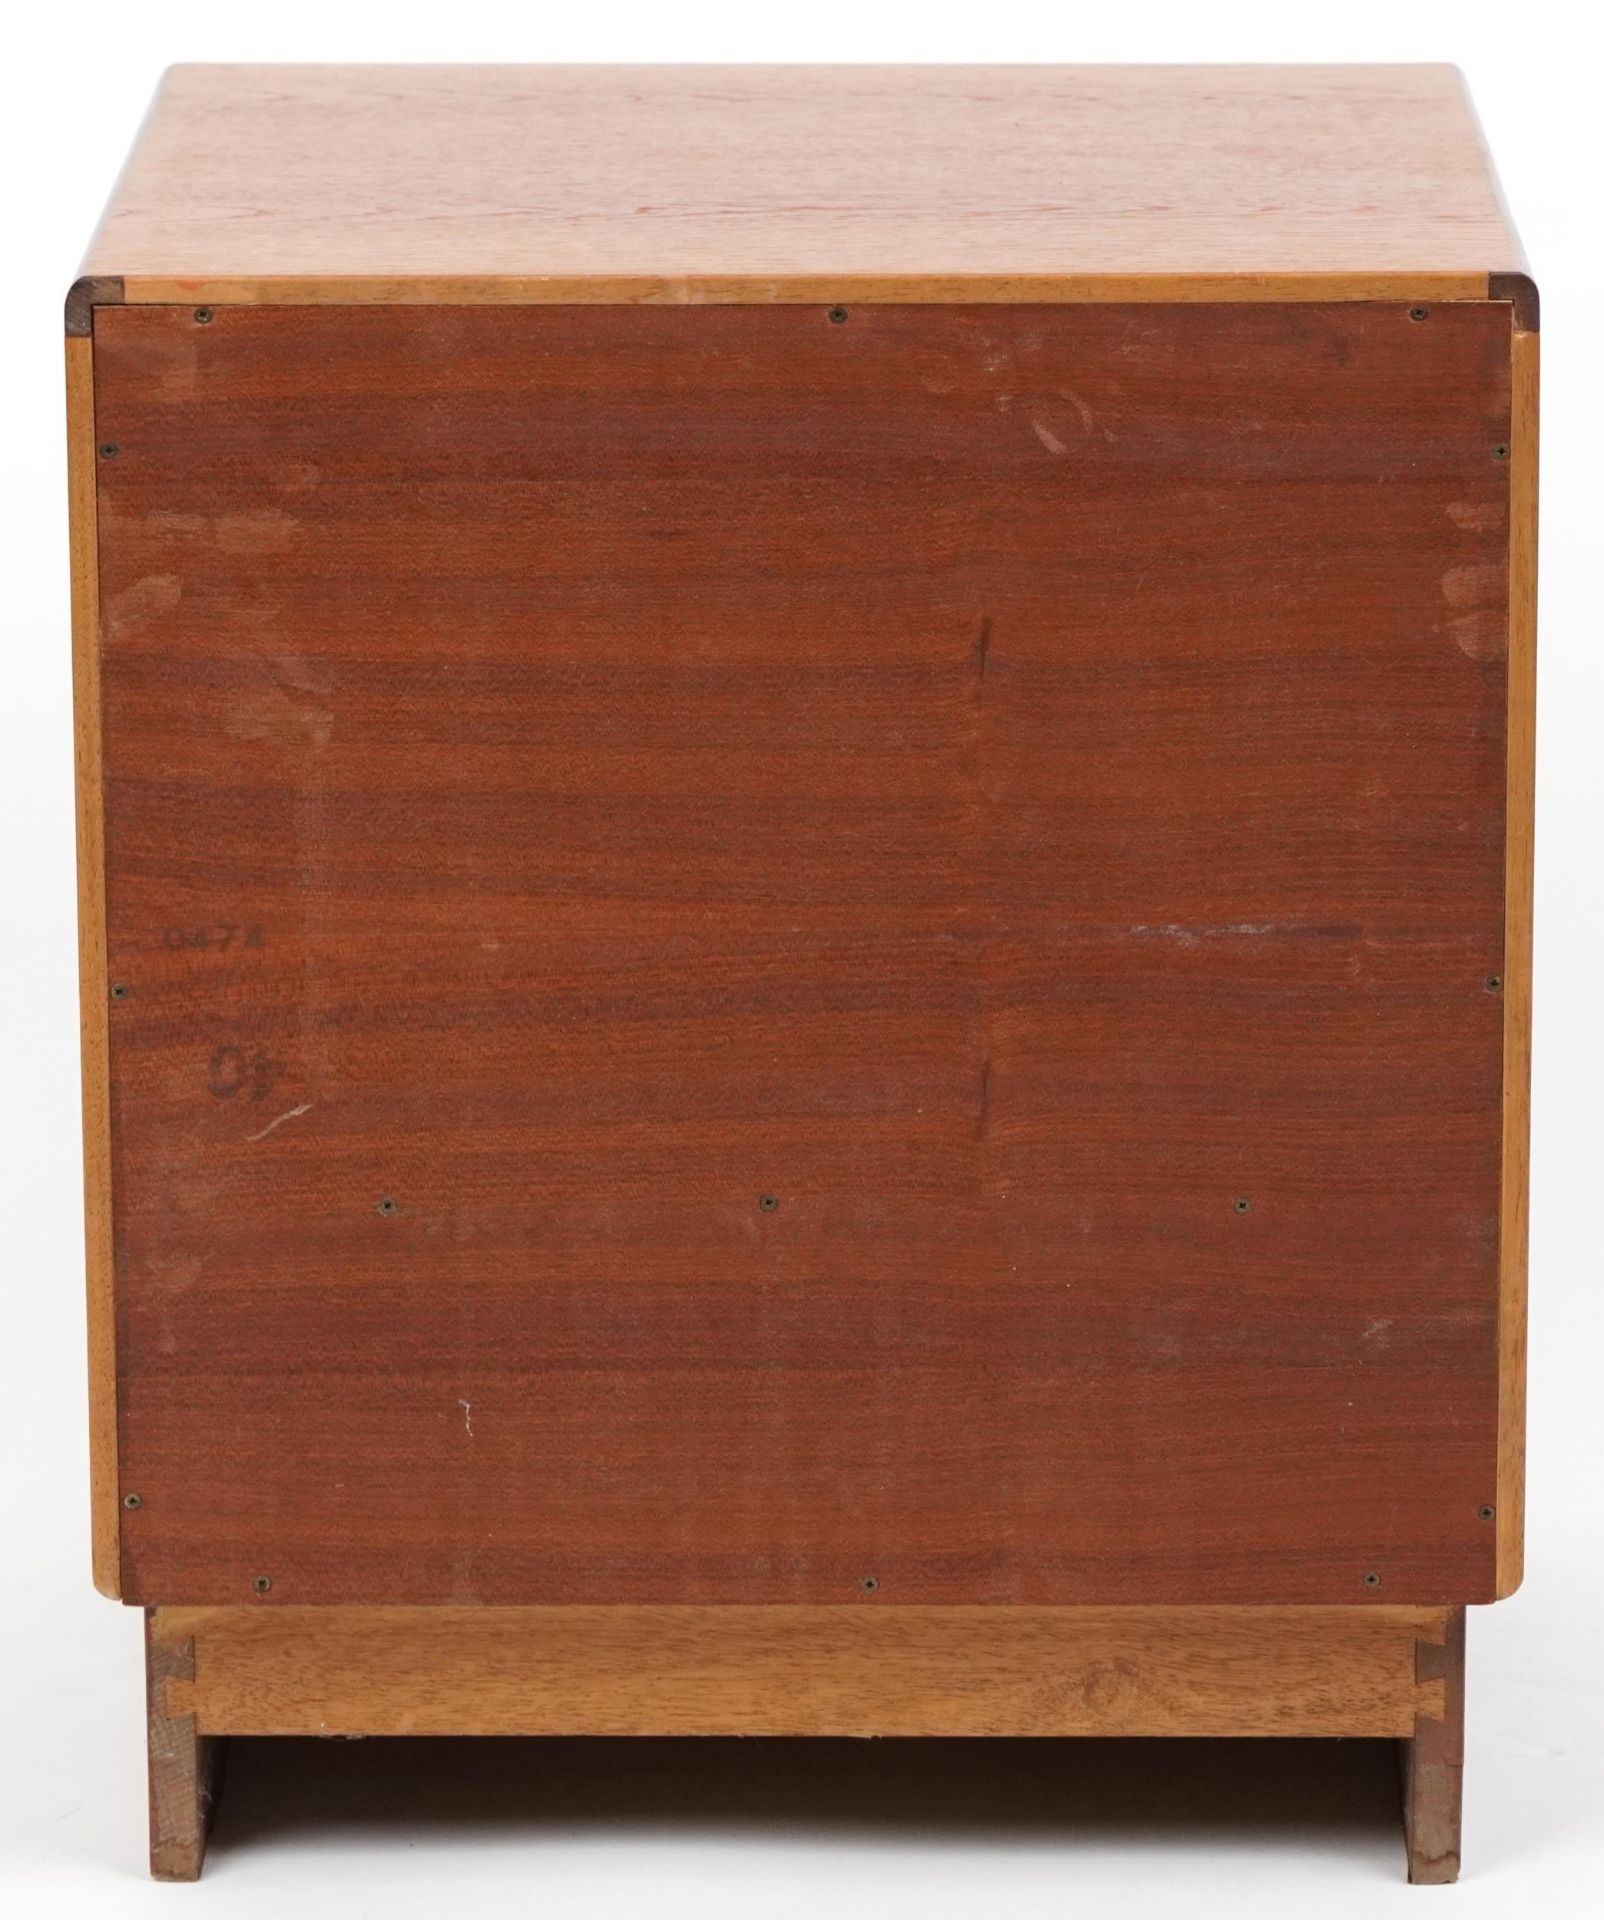 G Plan, Mid century Fresco teak nightstand with base drawer, 54cm H x 46cm W x 41cm D - Image 5 of 6